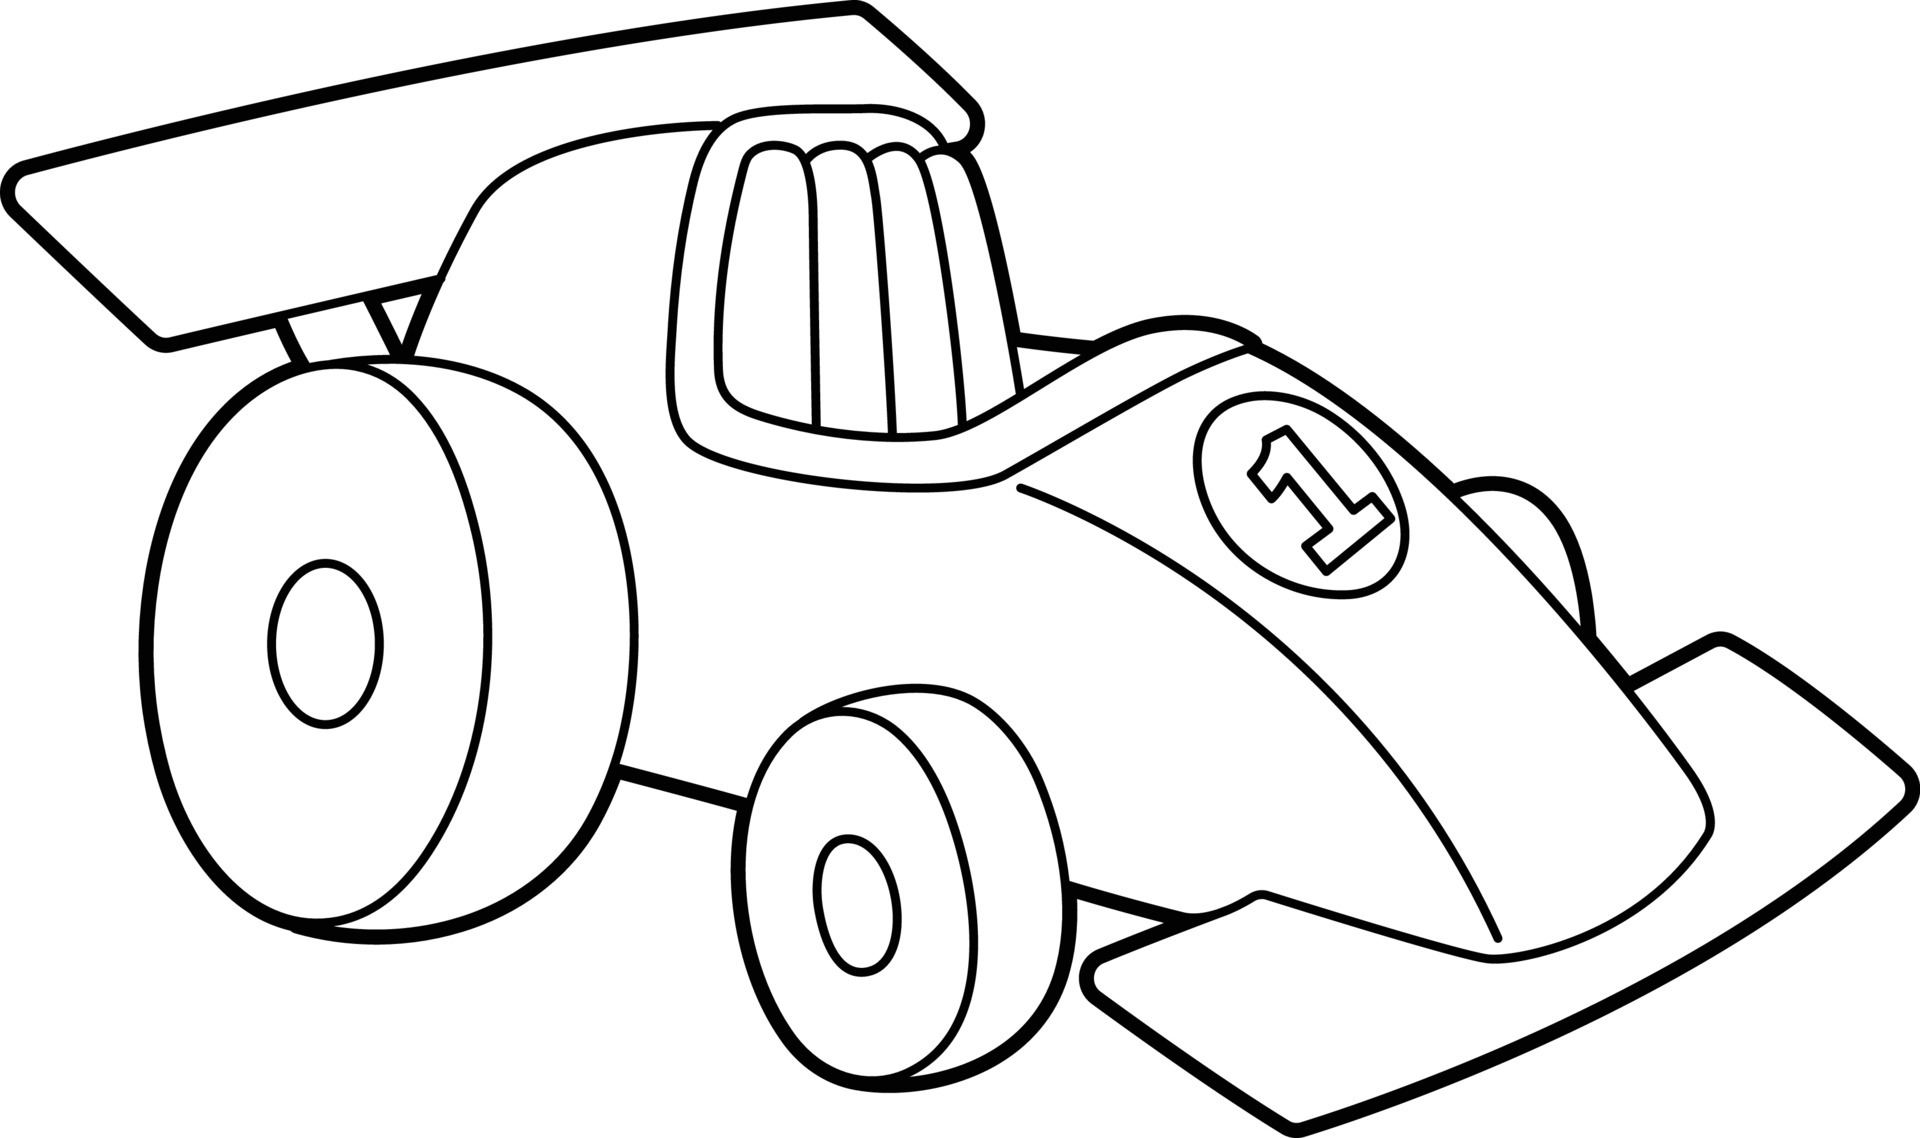 race car coloring pages